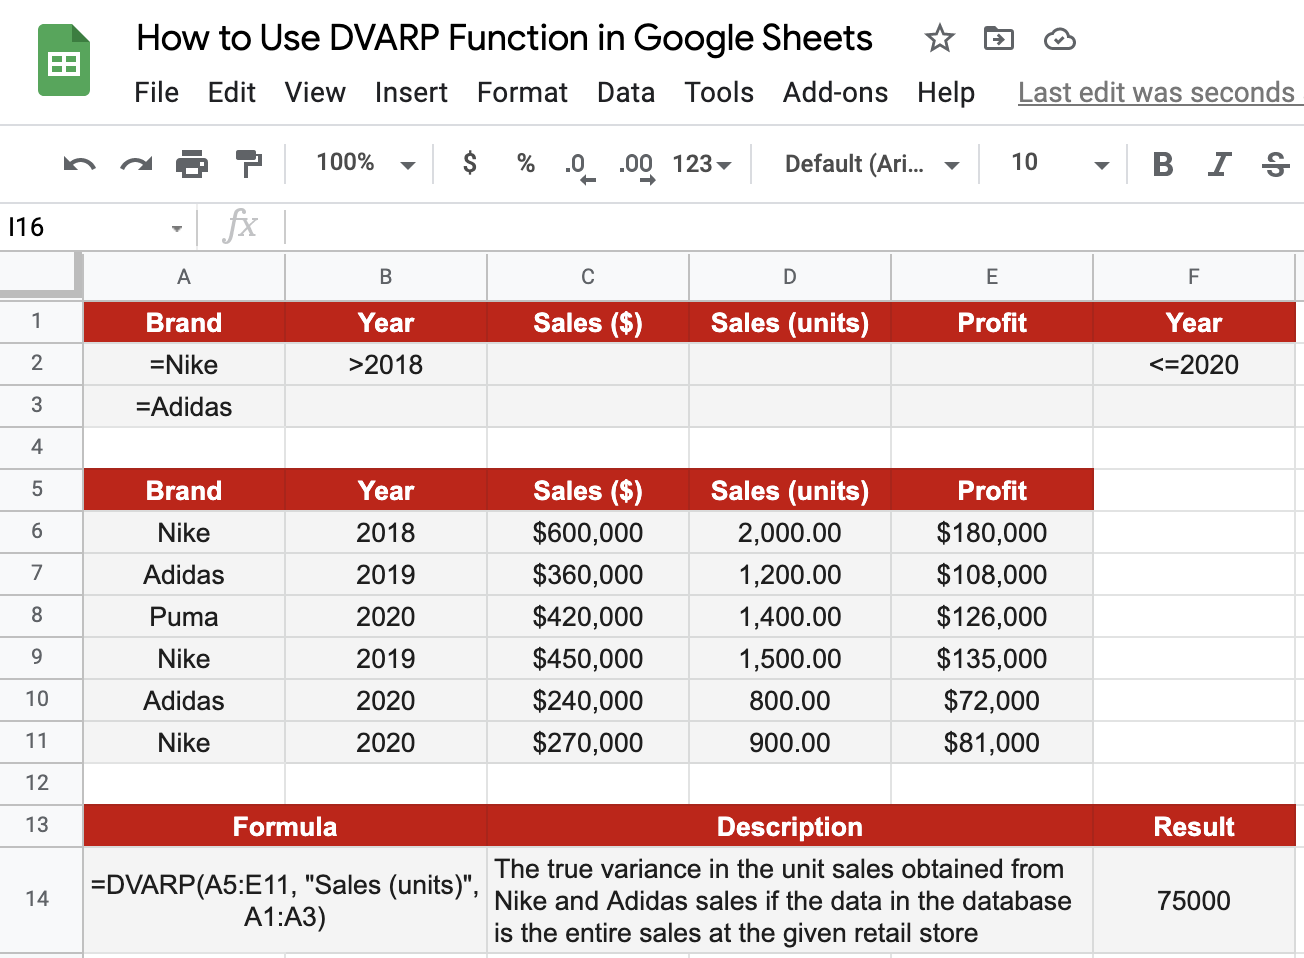 DVARP function in Google Sheets